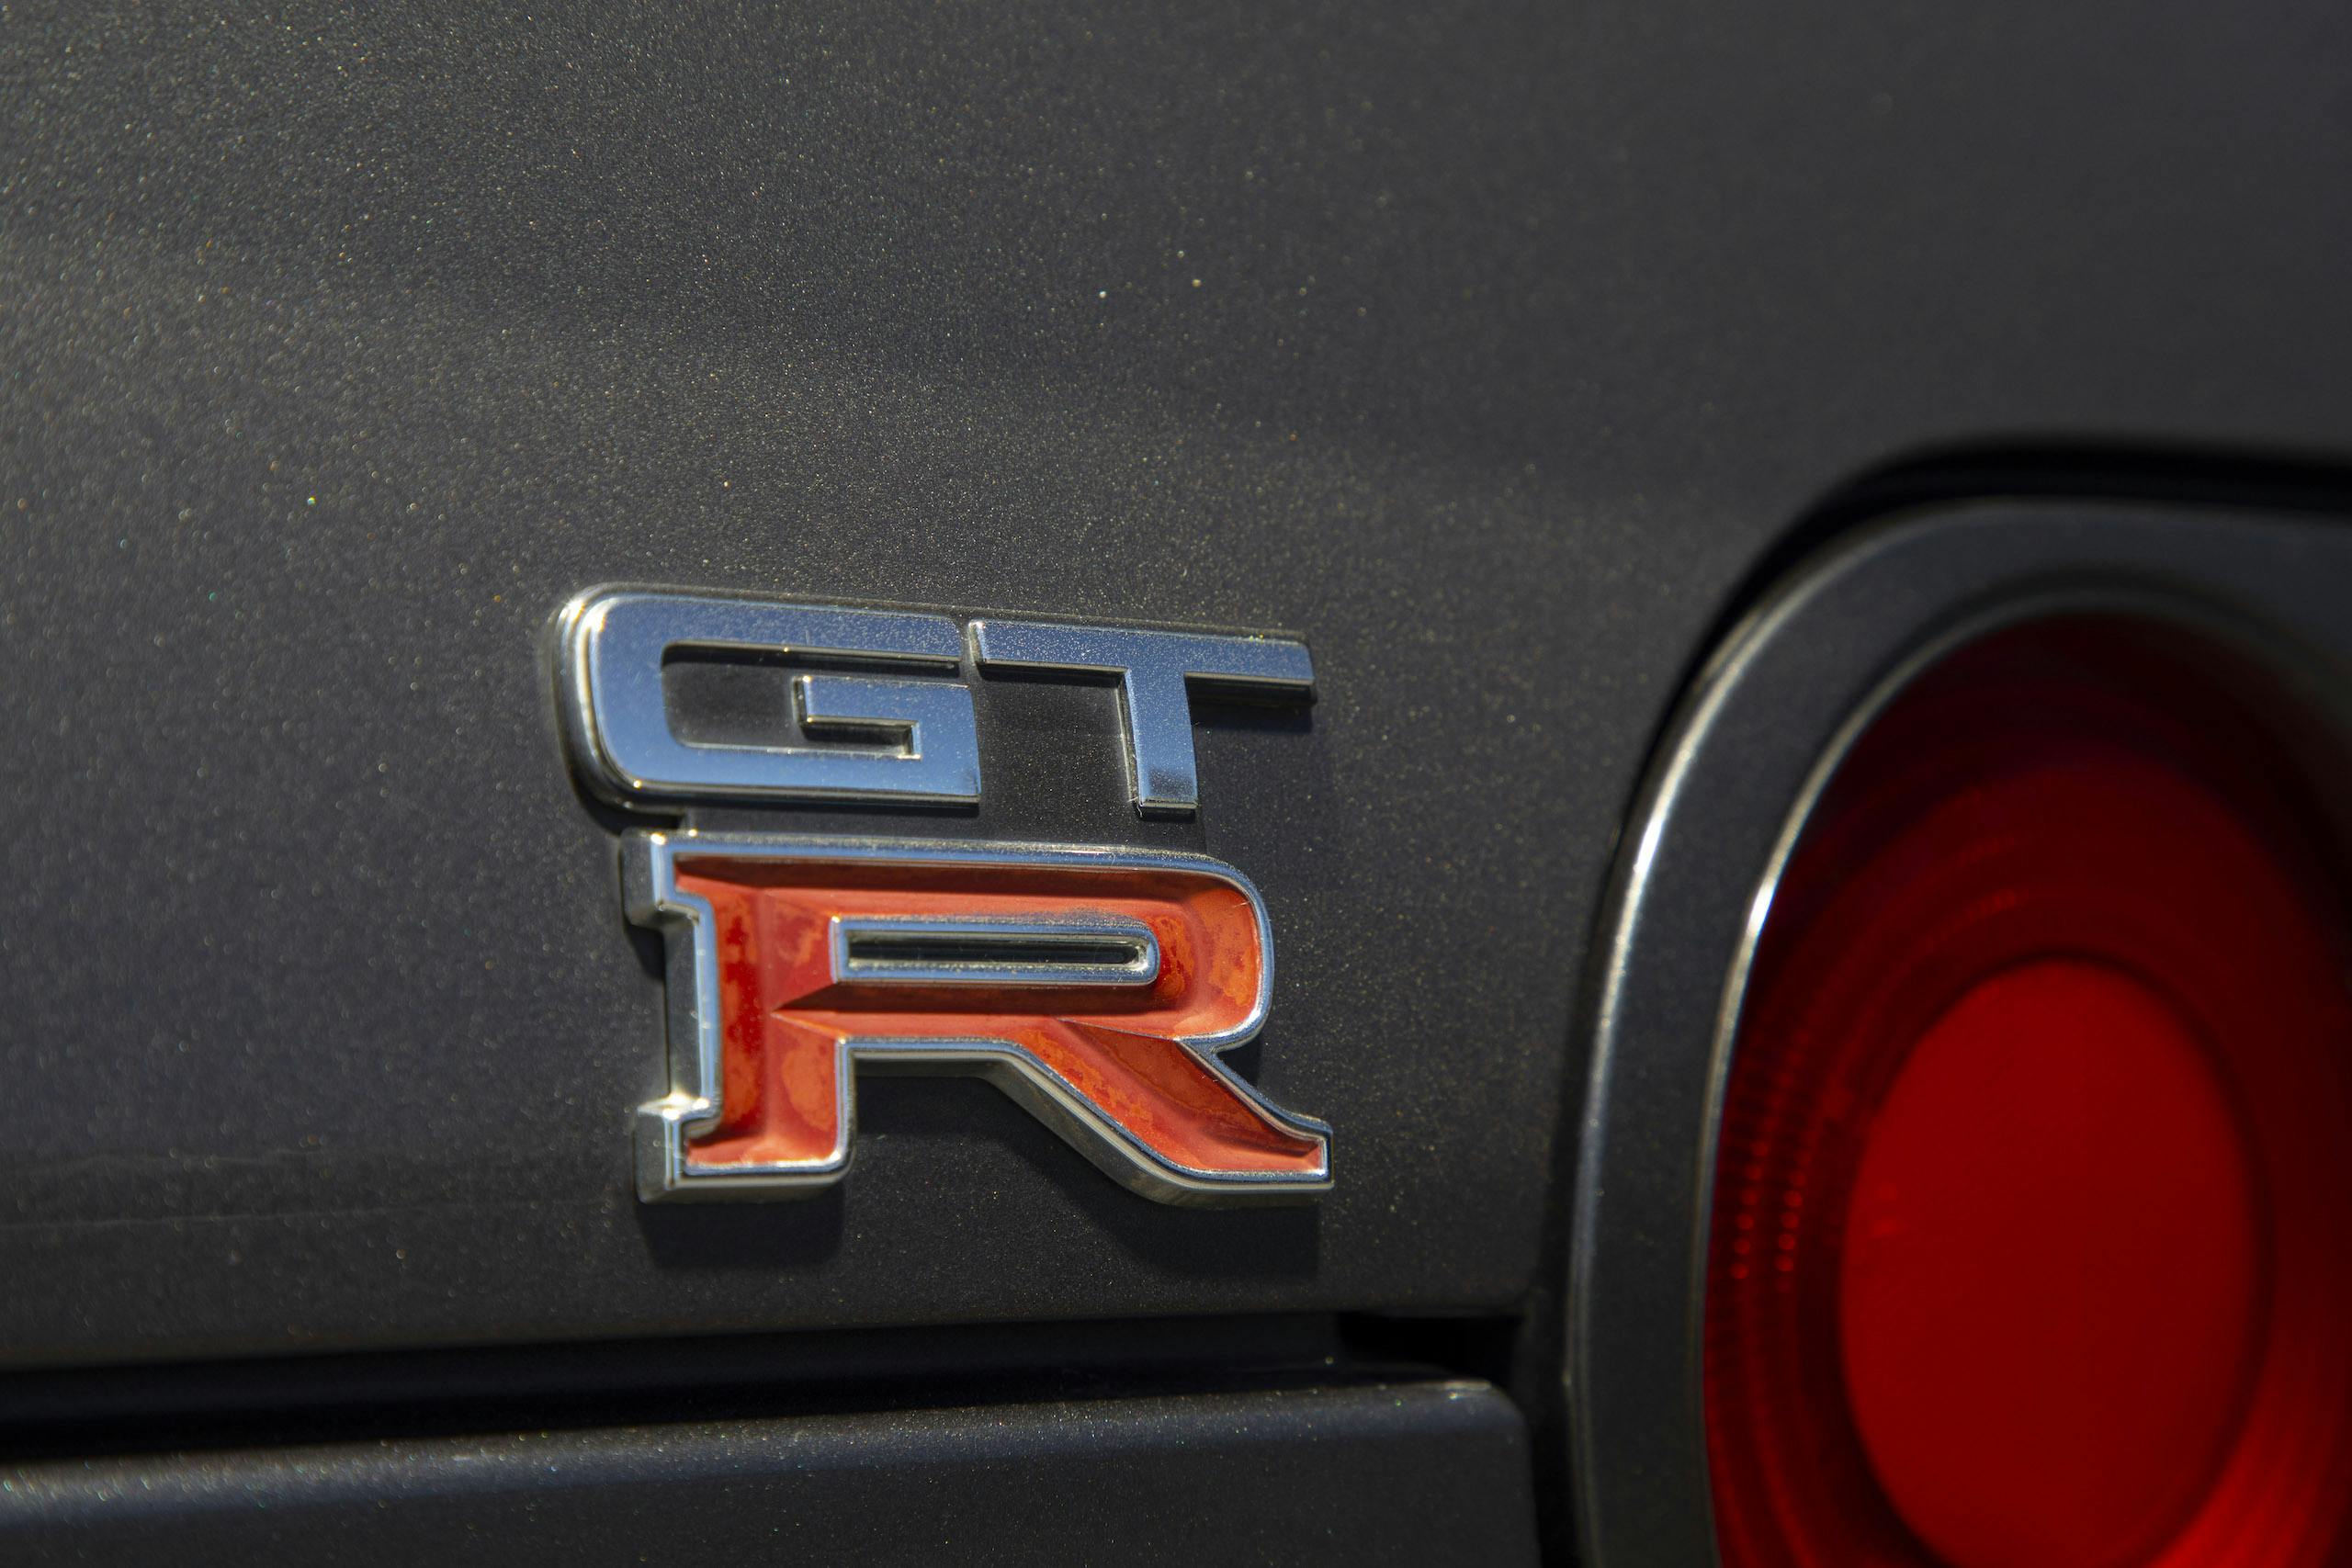 Nissan Skyline R32 GT-R badge